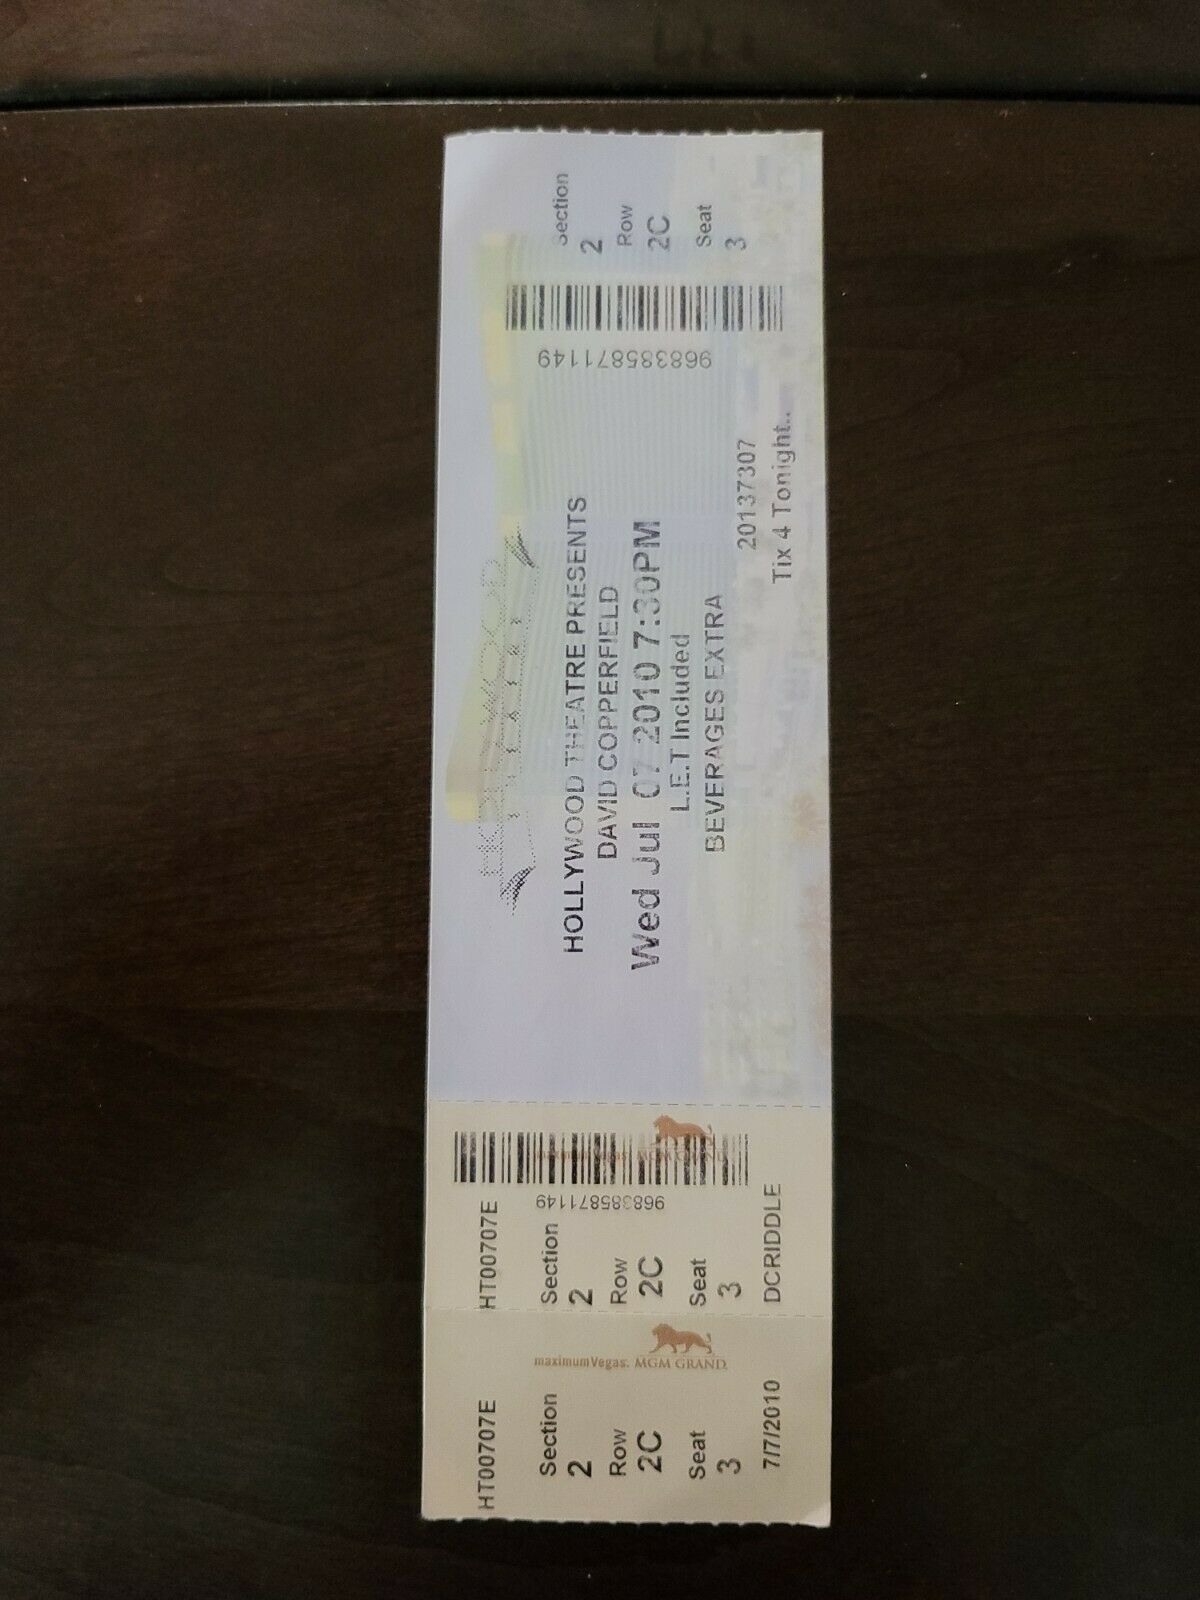 David Copperfield 2010, Hollywood Theatre Original Concert Ticket Stub